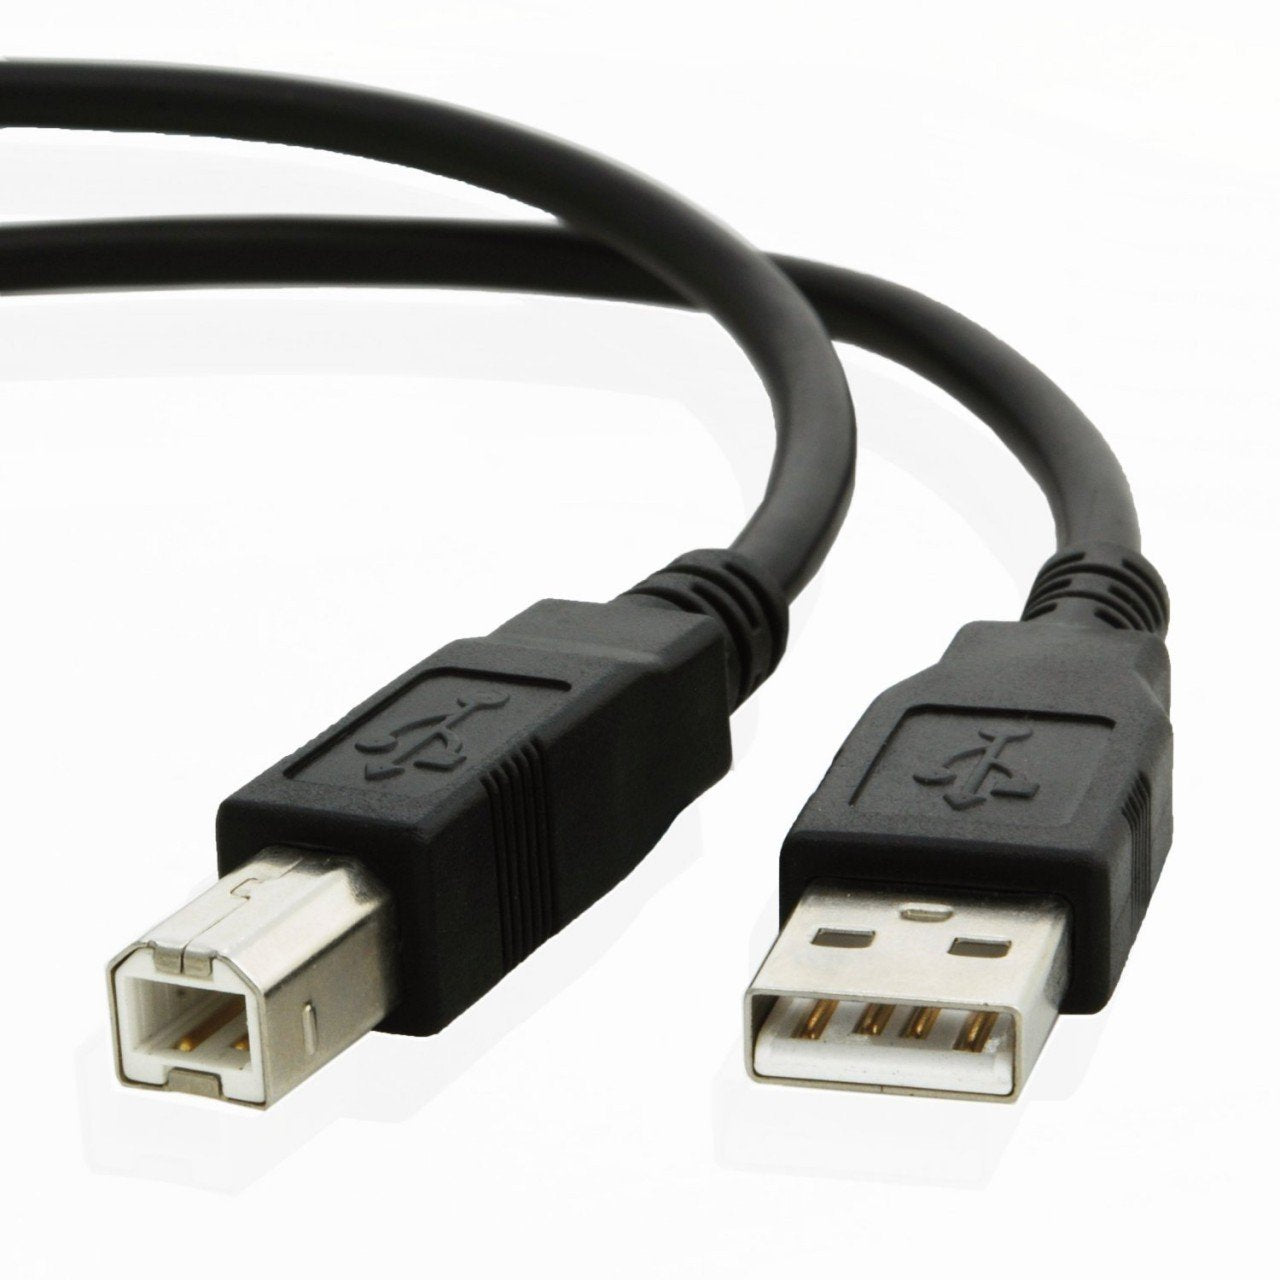 USB cable for Canon PIXMA MP250